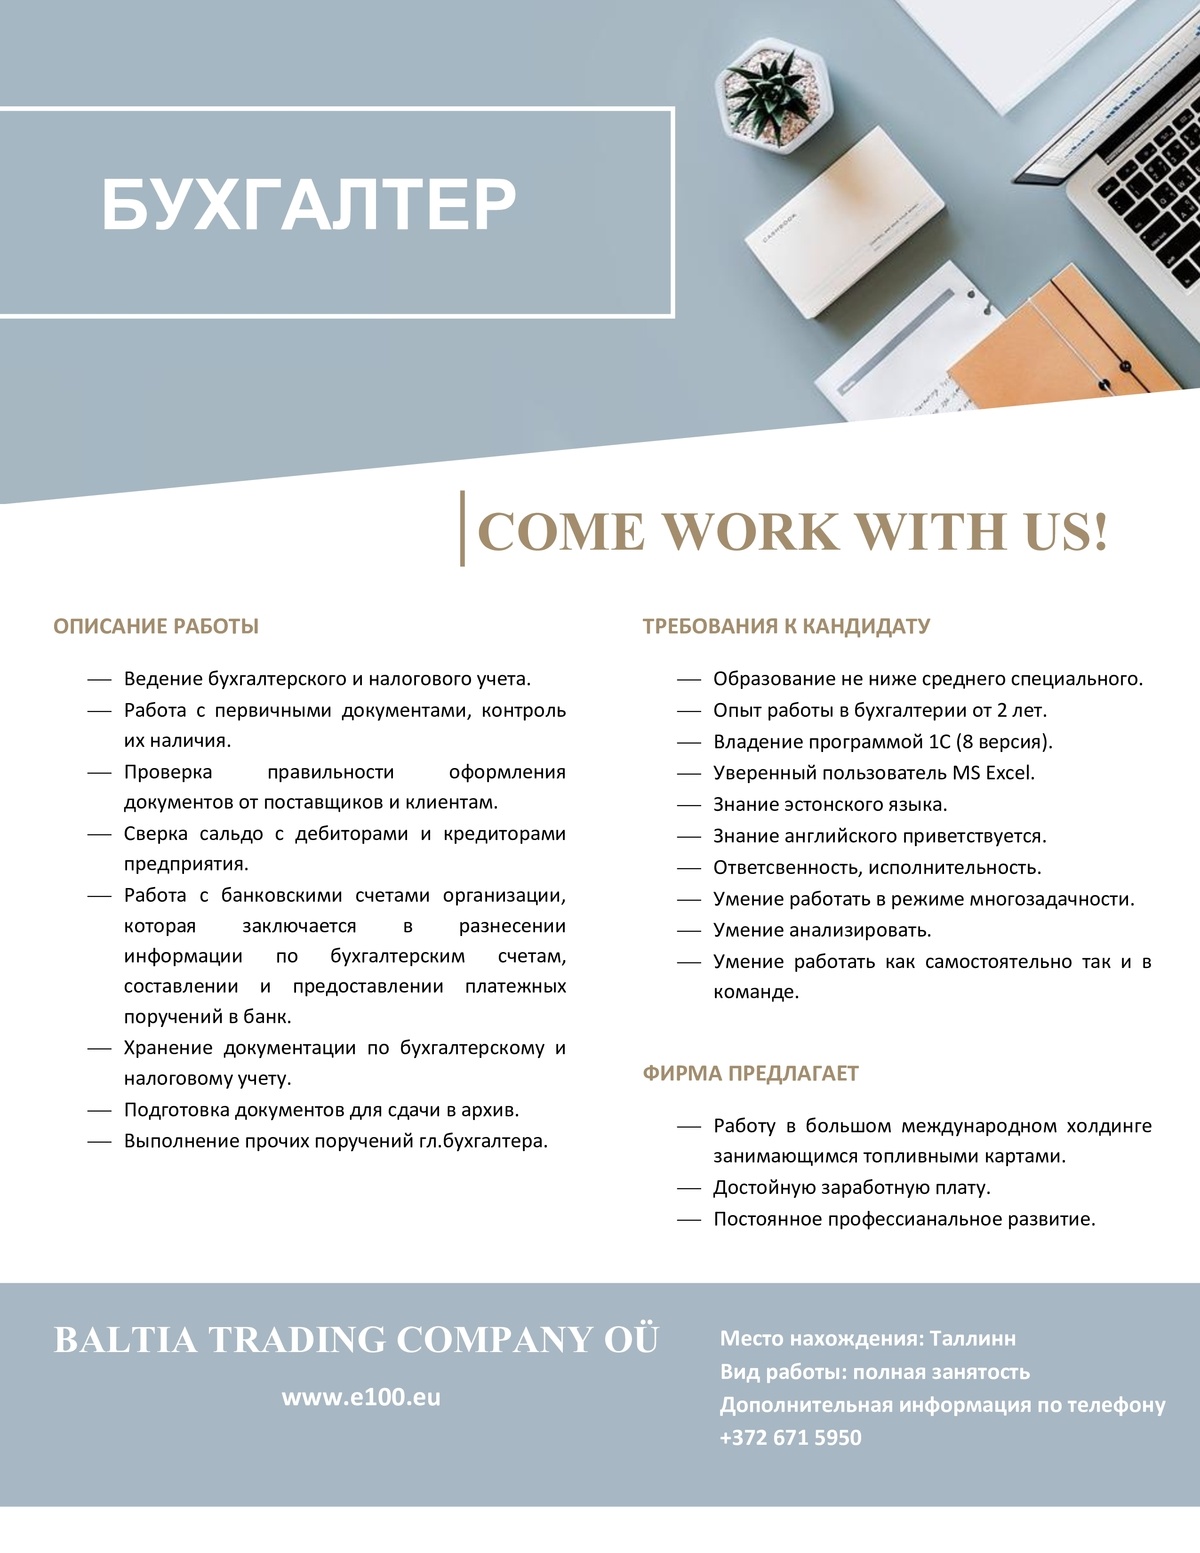 Baltia Trading Company OÜ  Бухгалтер